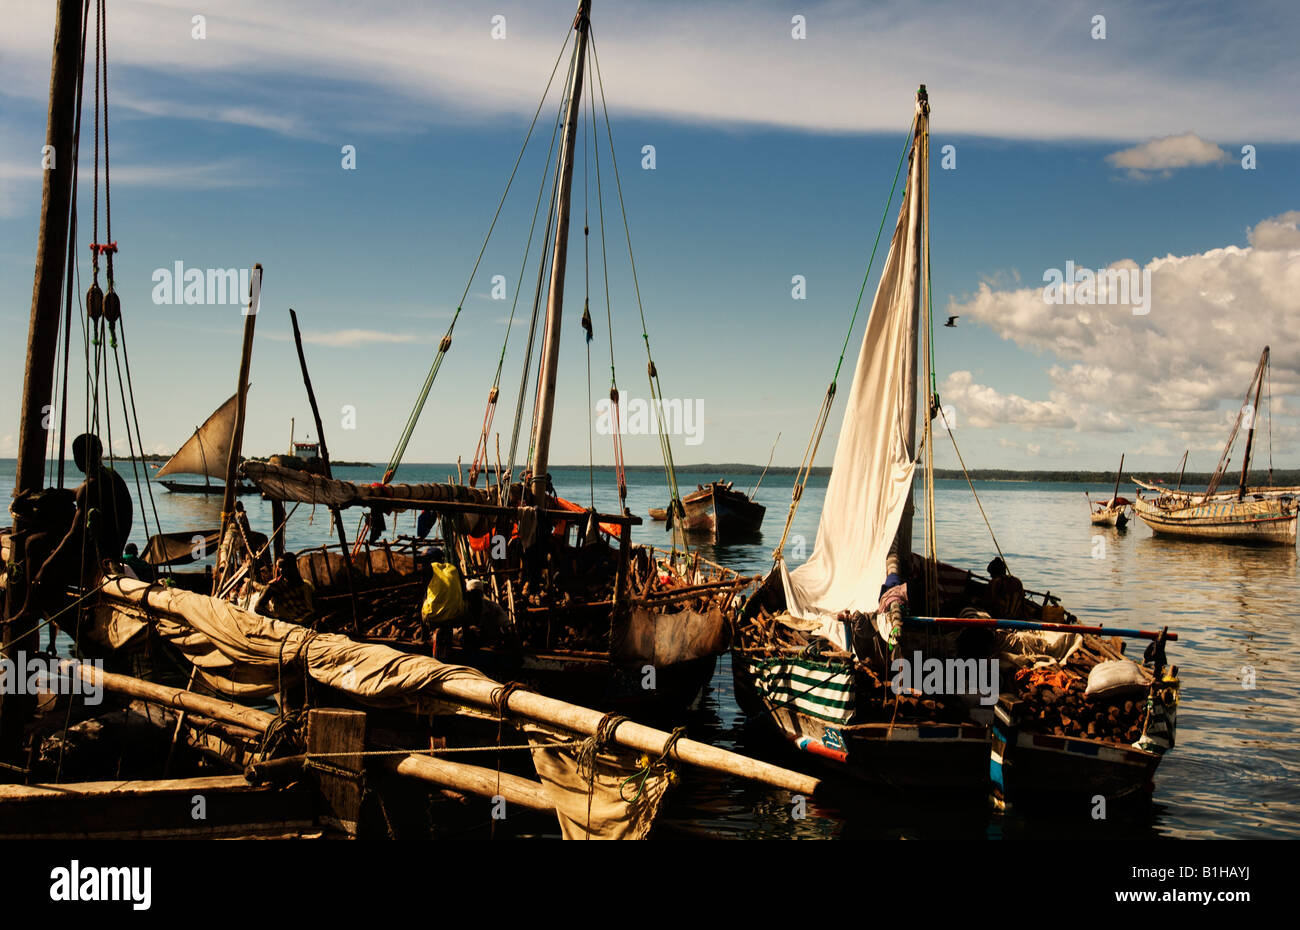 Dhow navi a vela in pietra porta cittadina, Zanzibar, Tanzania Africa Orientale. Amyn Nasser amynnasser [camera per copia] botteghe artigiane Foto Stock